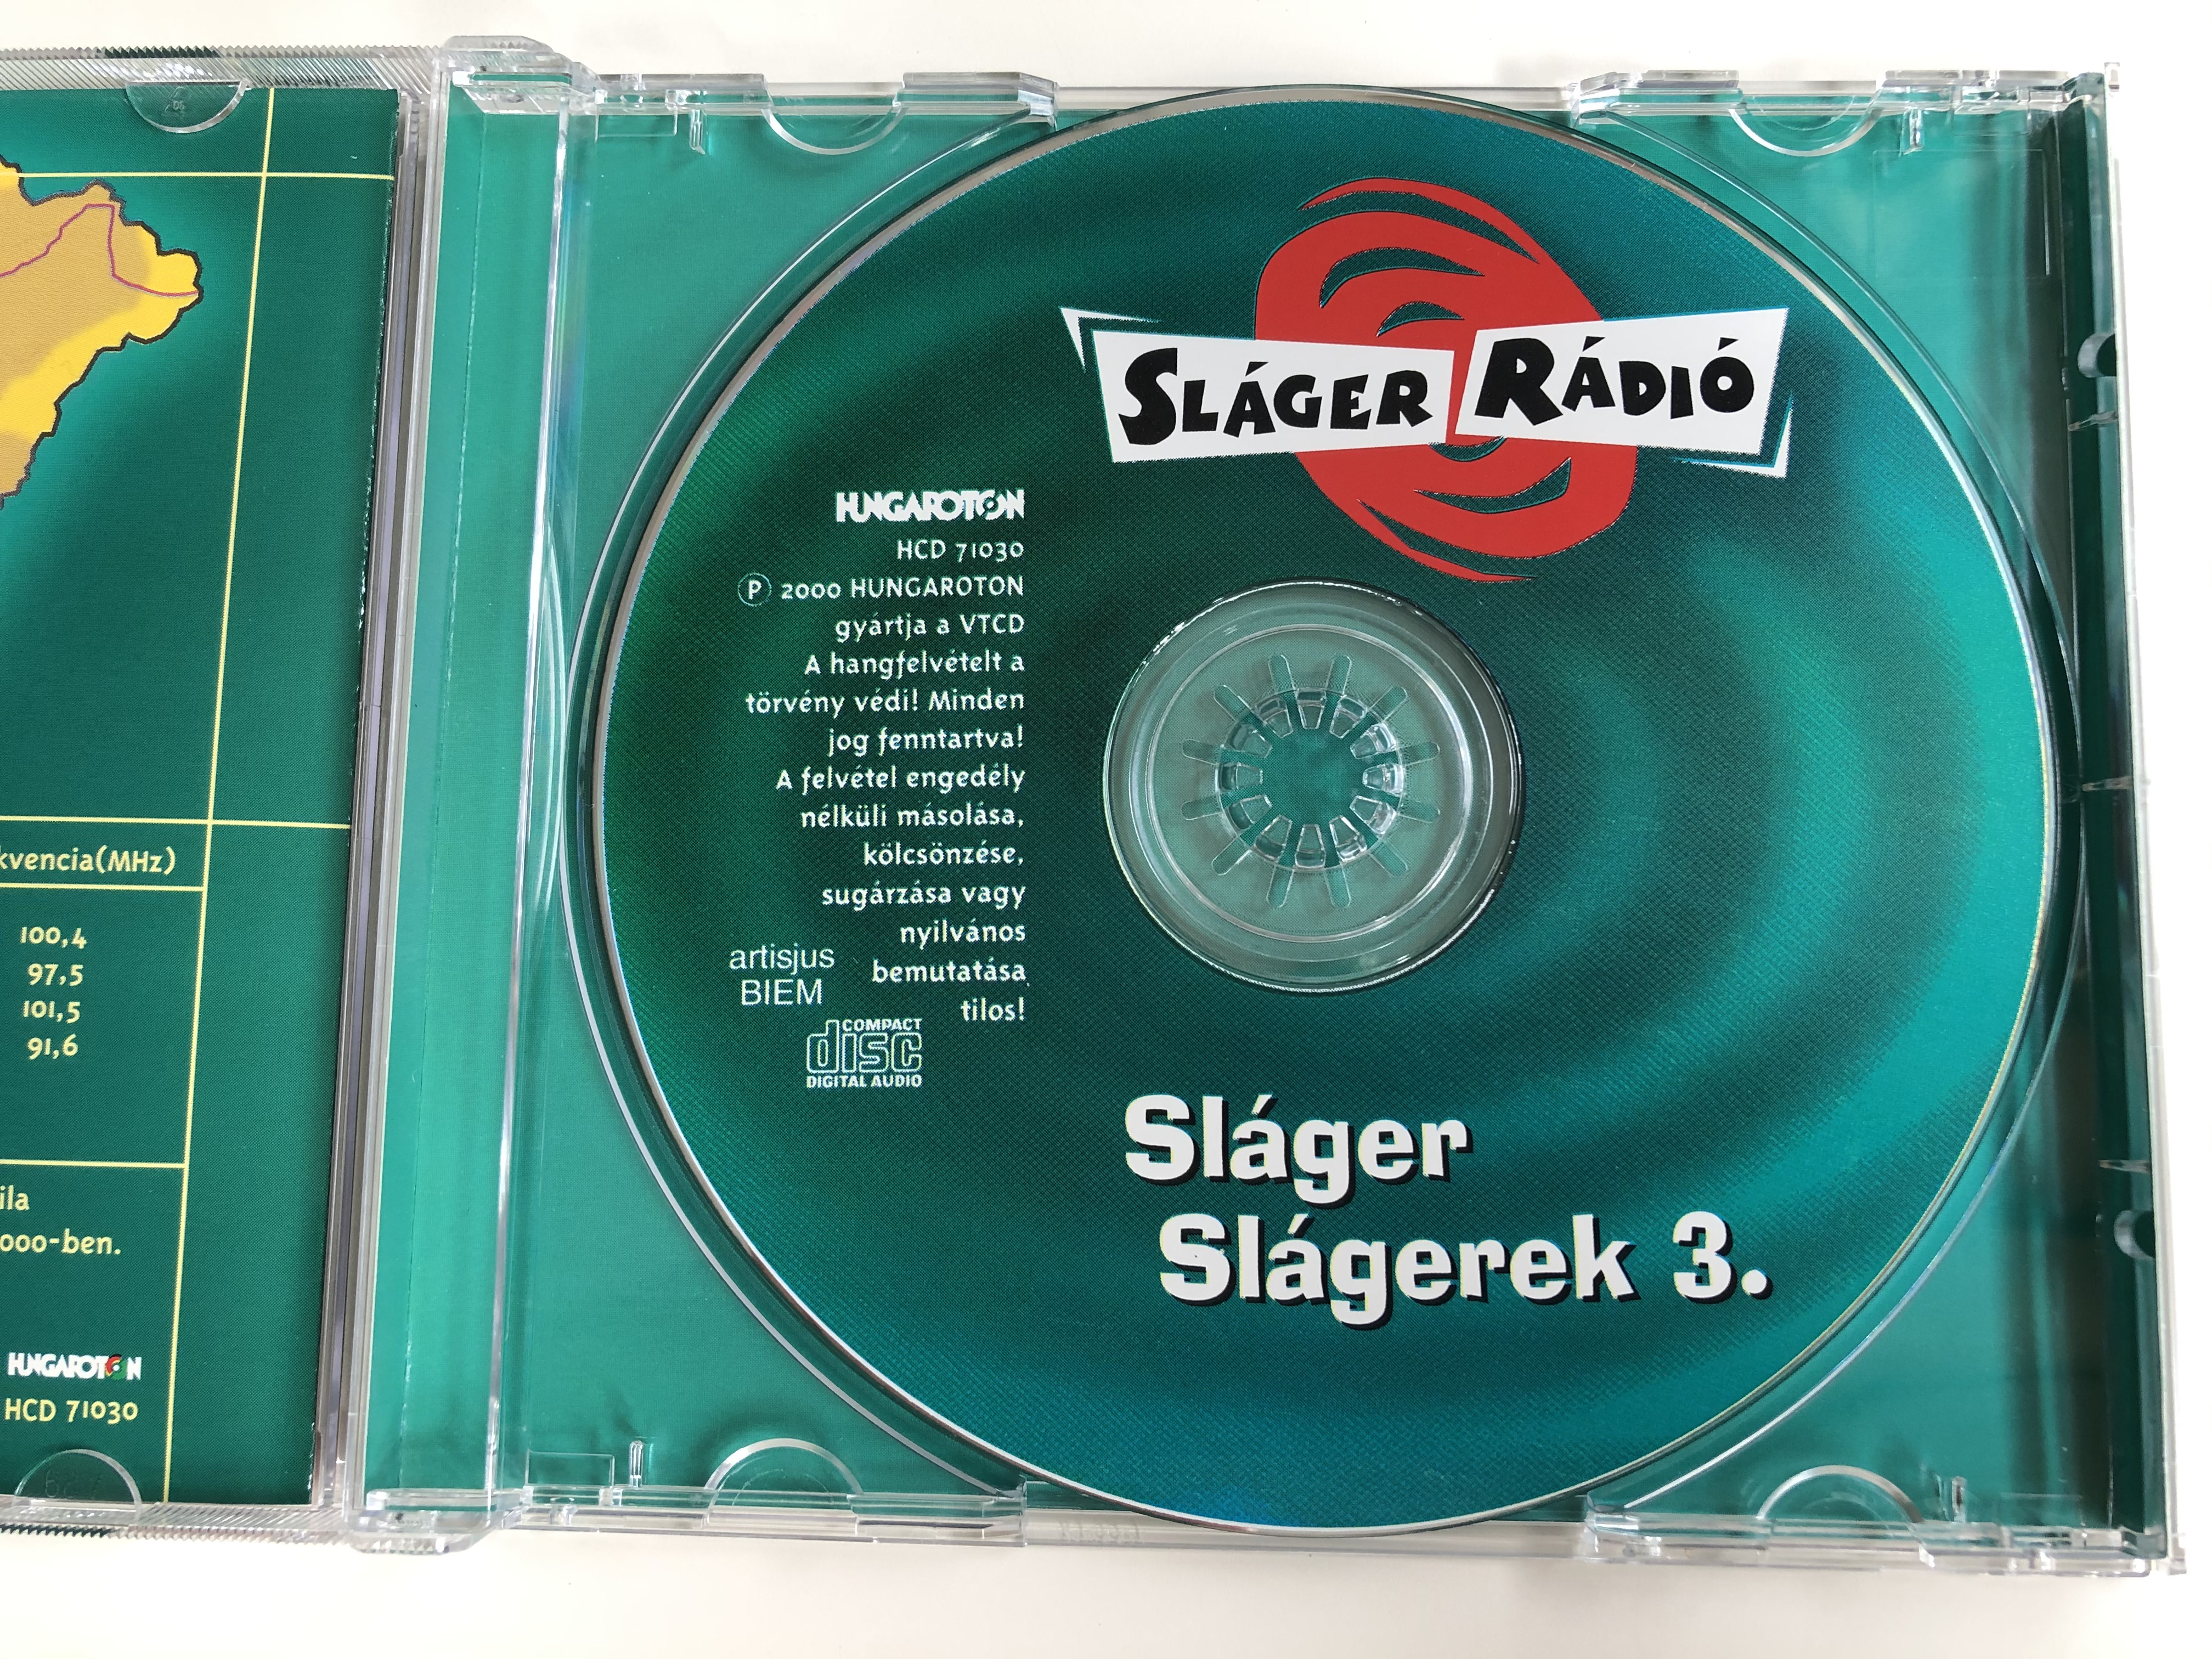 sl-ger-radio-sl-ger-sl-gerek-3.-skorpi-m-t-p-ter-bergendy-fonogr-f-apostol-koncz-zsuzsa-a-60-as-70-es-evek-legnagyobb-slagerei-hungaroton-audio-cd-2000-hcd-71030-4-.jpg